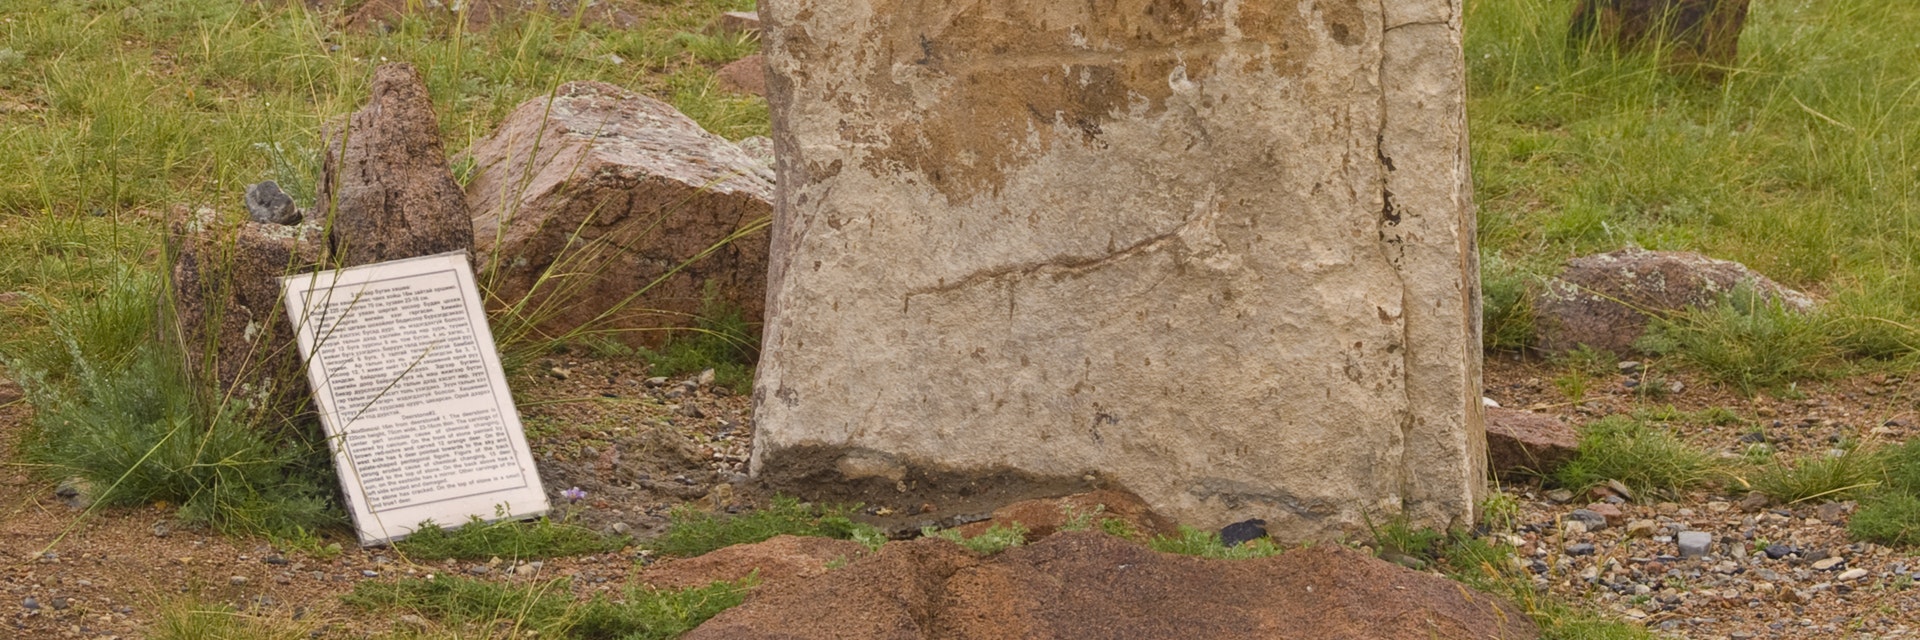 Deer stone in Uushigiin Uver, Mongolia.